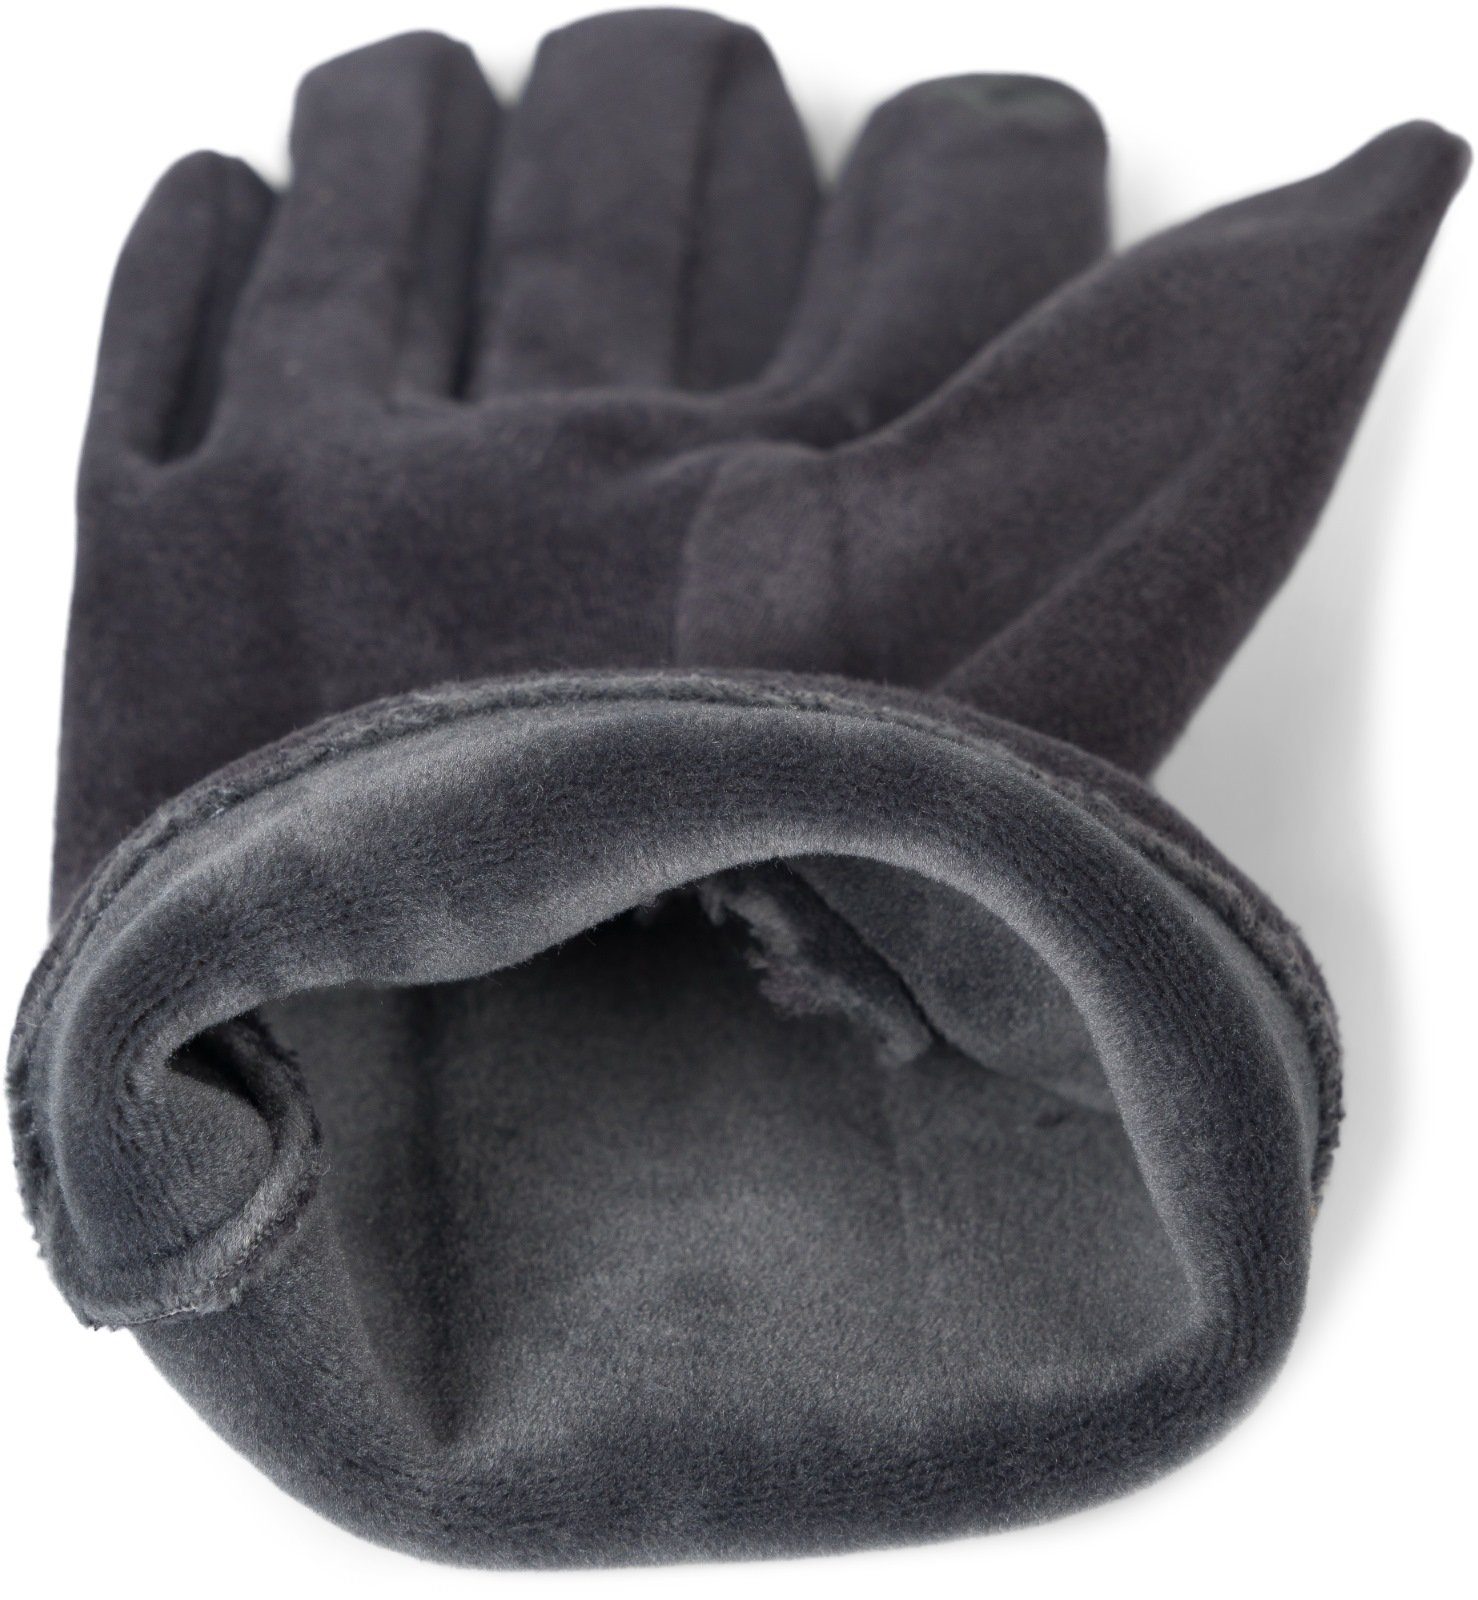 styleBREAKER Fleecehandschuhe Einfarbige Handschuhe Dunkelgrau Ziernähte Touchscreen